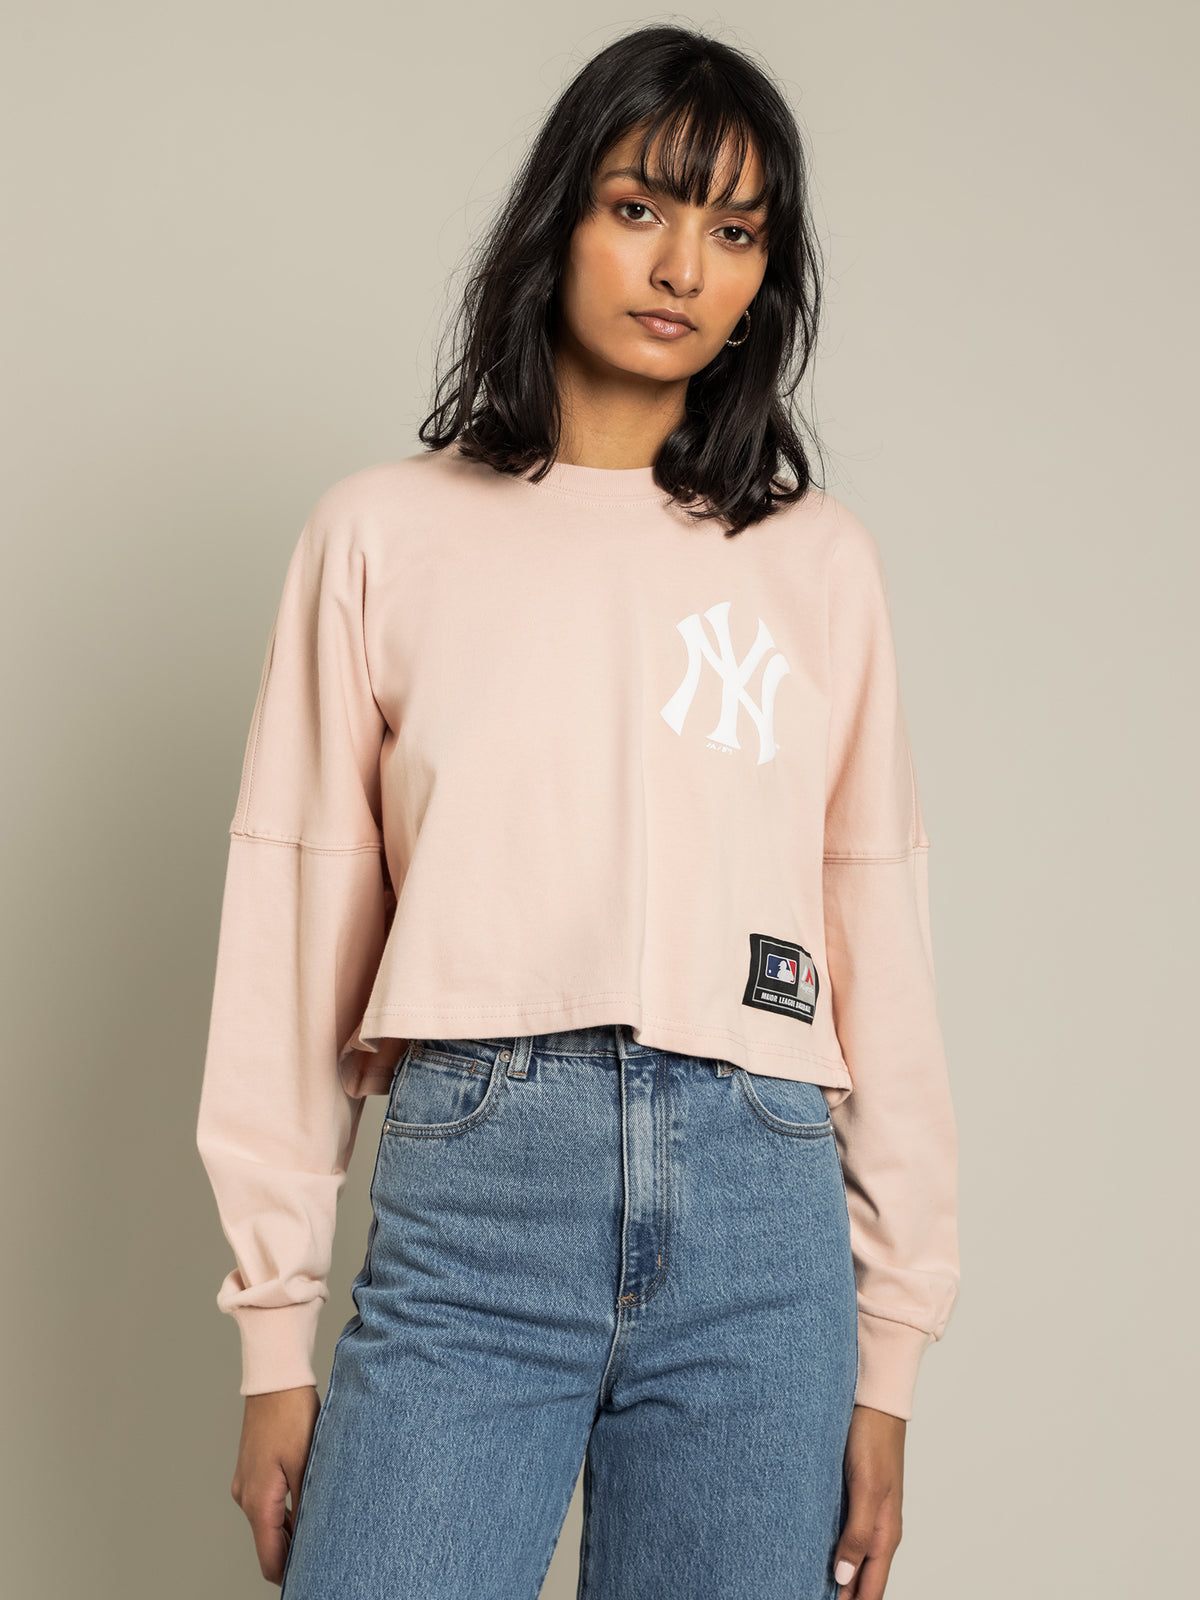 Rando NY Yankees Long Sleeve Crop T-Shirt in Peach